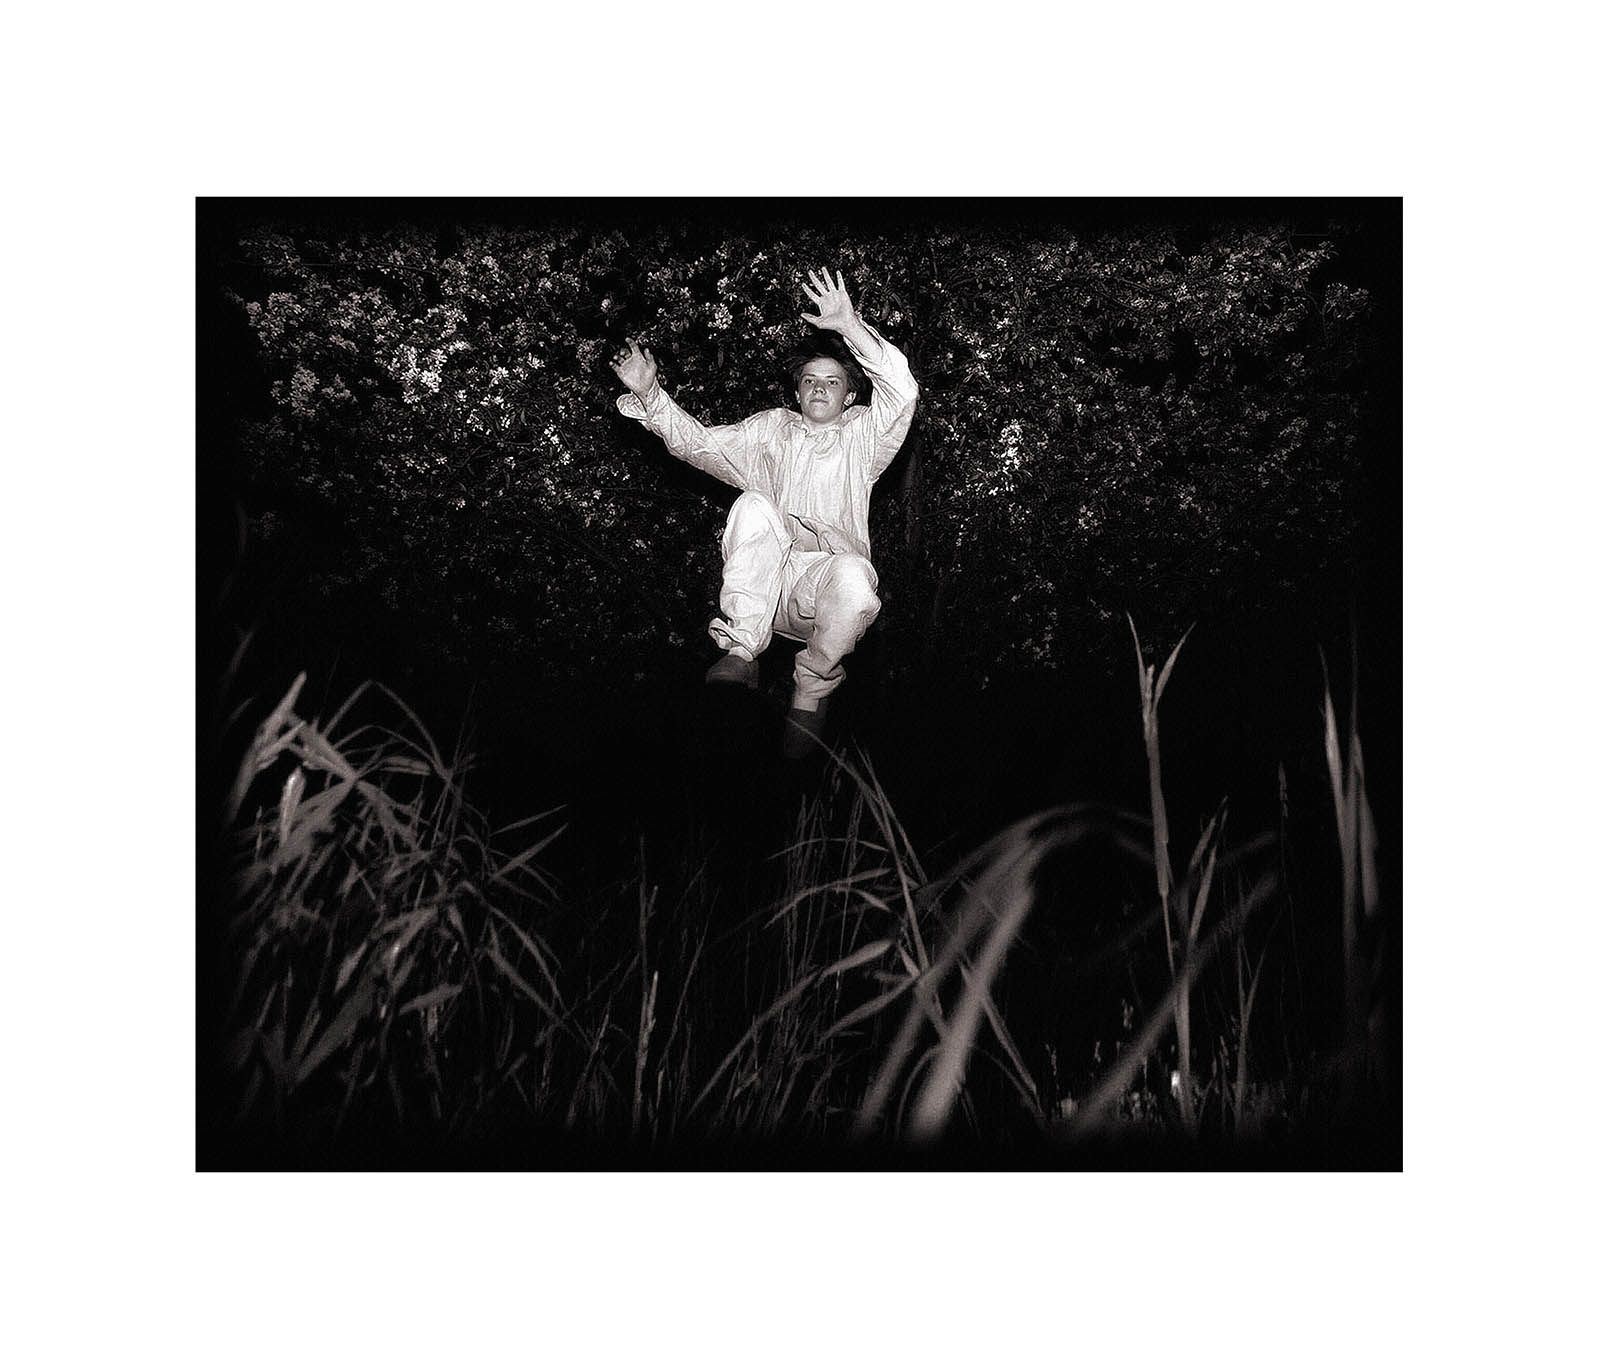 Tim-White-Sobieski-photoportfolio-Awakening-photography-series-museum-exhibition-at-international-center-of-photography